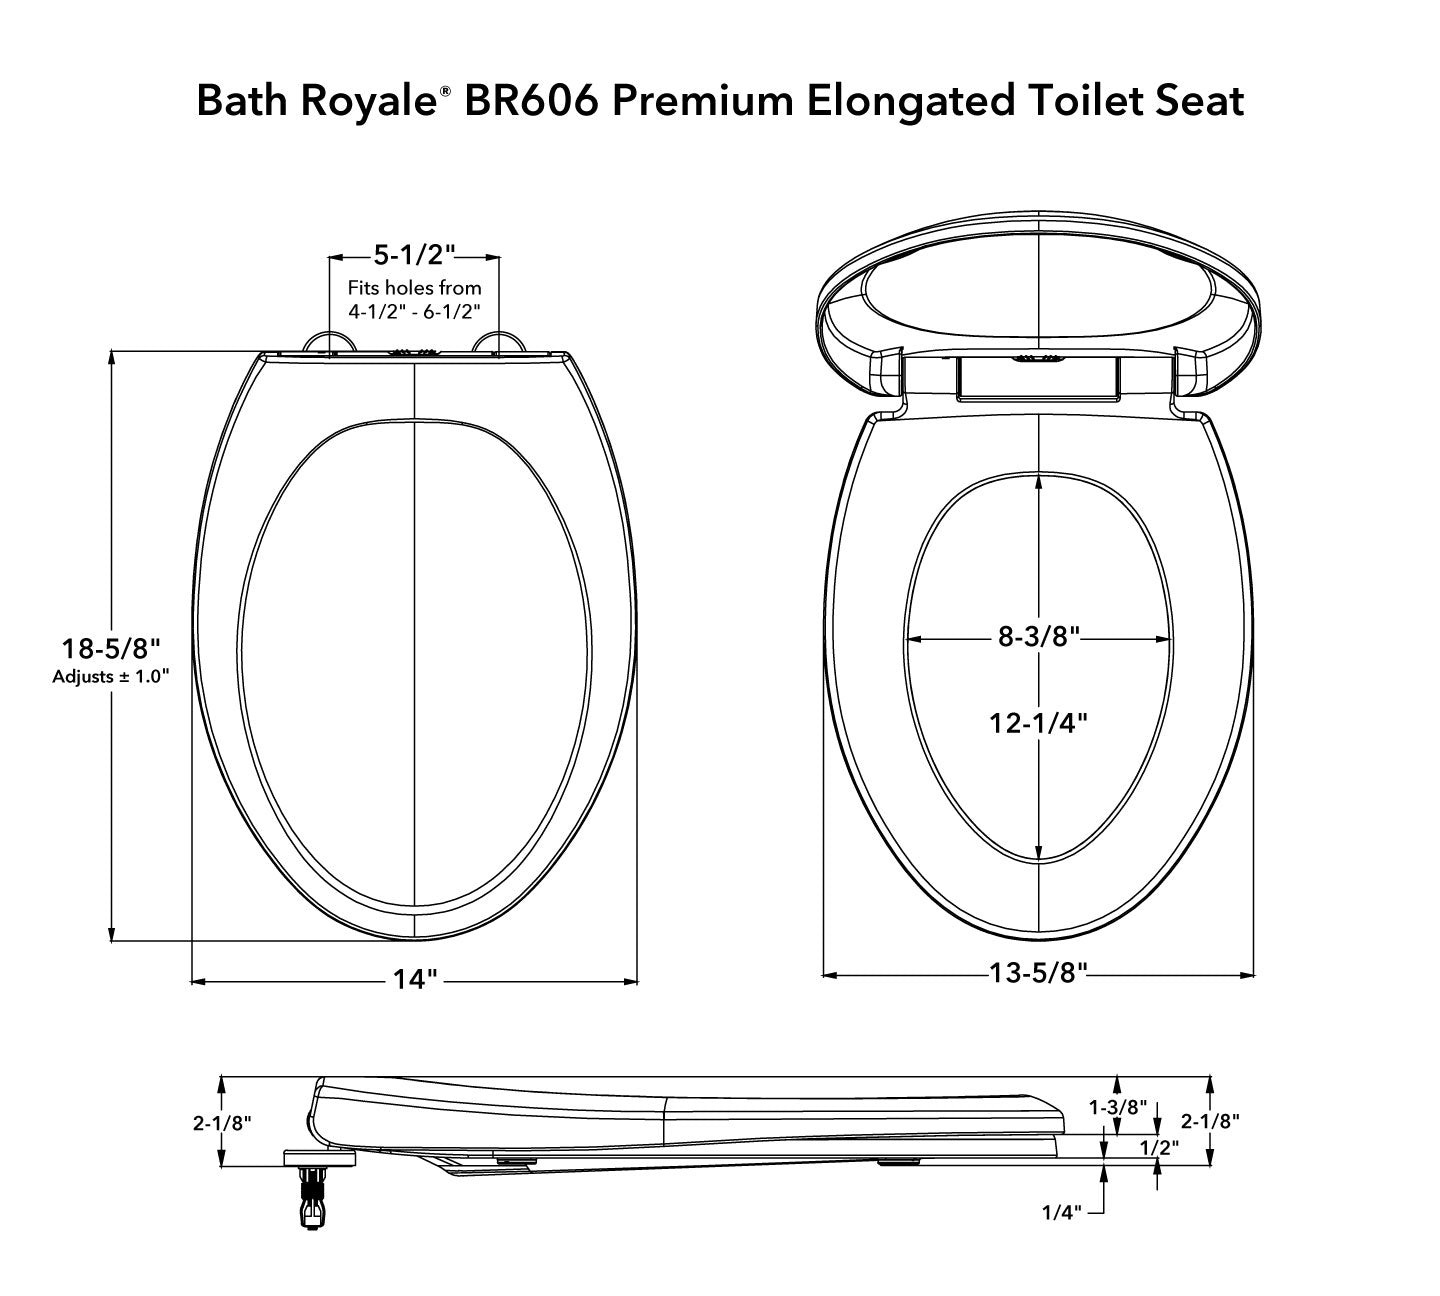 BR620 Premium Elongated Toilet Seat Dimensions